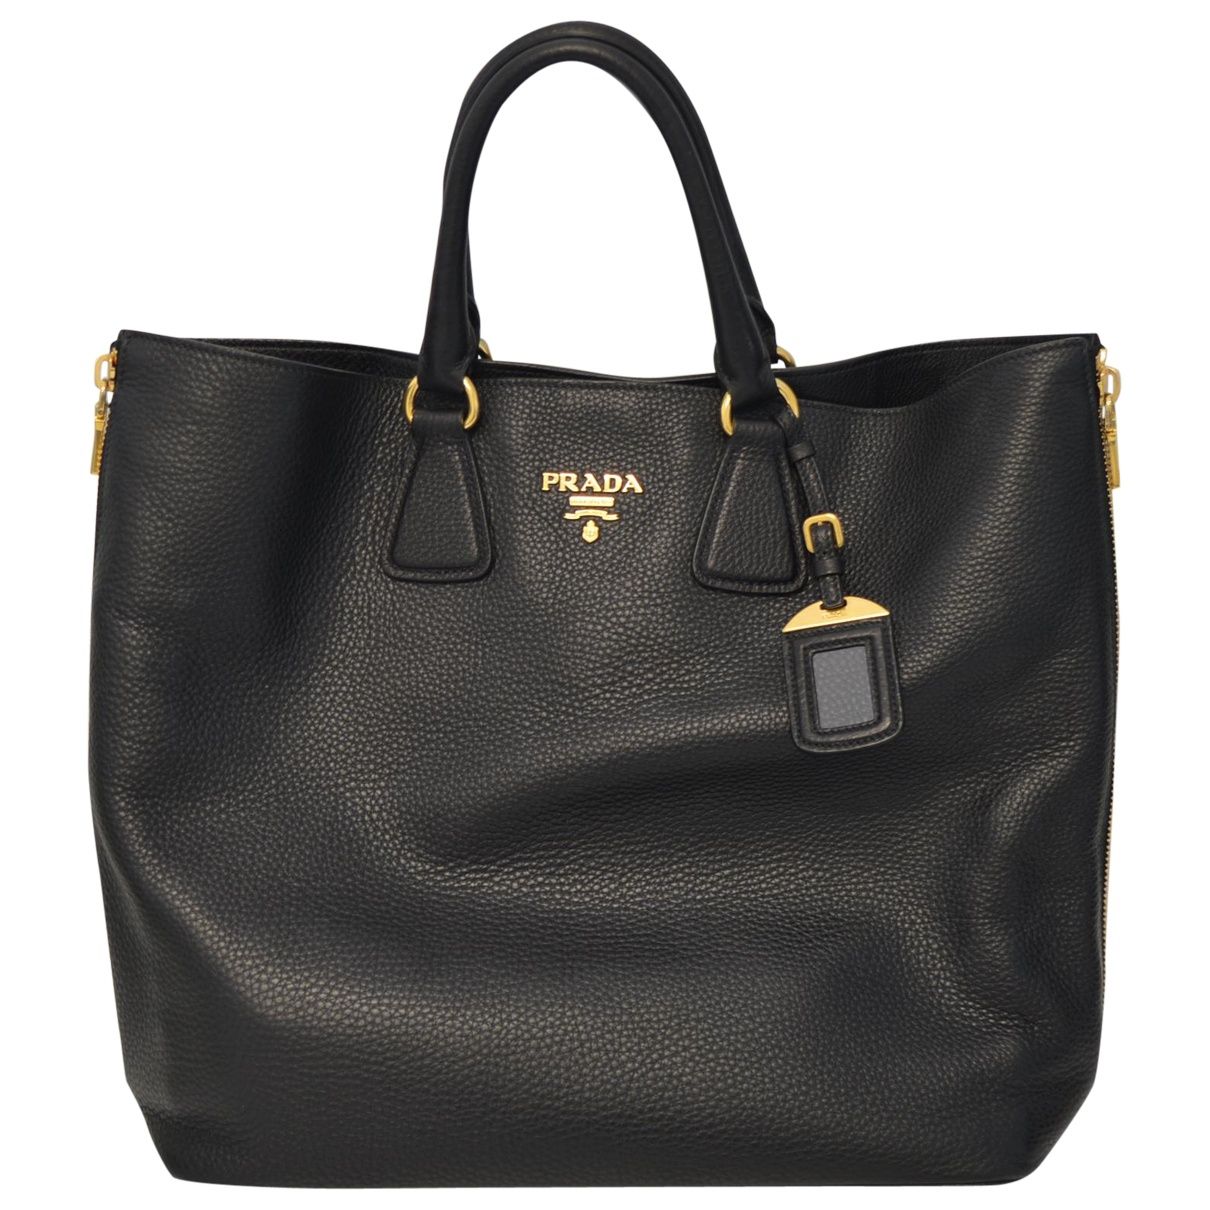 Prada Handbags: Where Modern Elegance Meets Timeless Sophistication